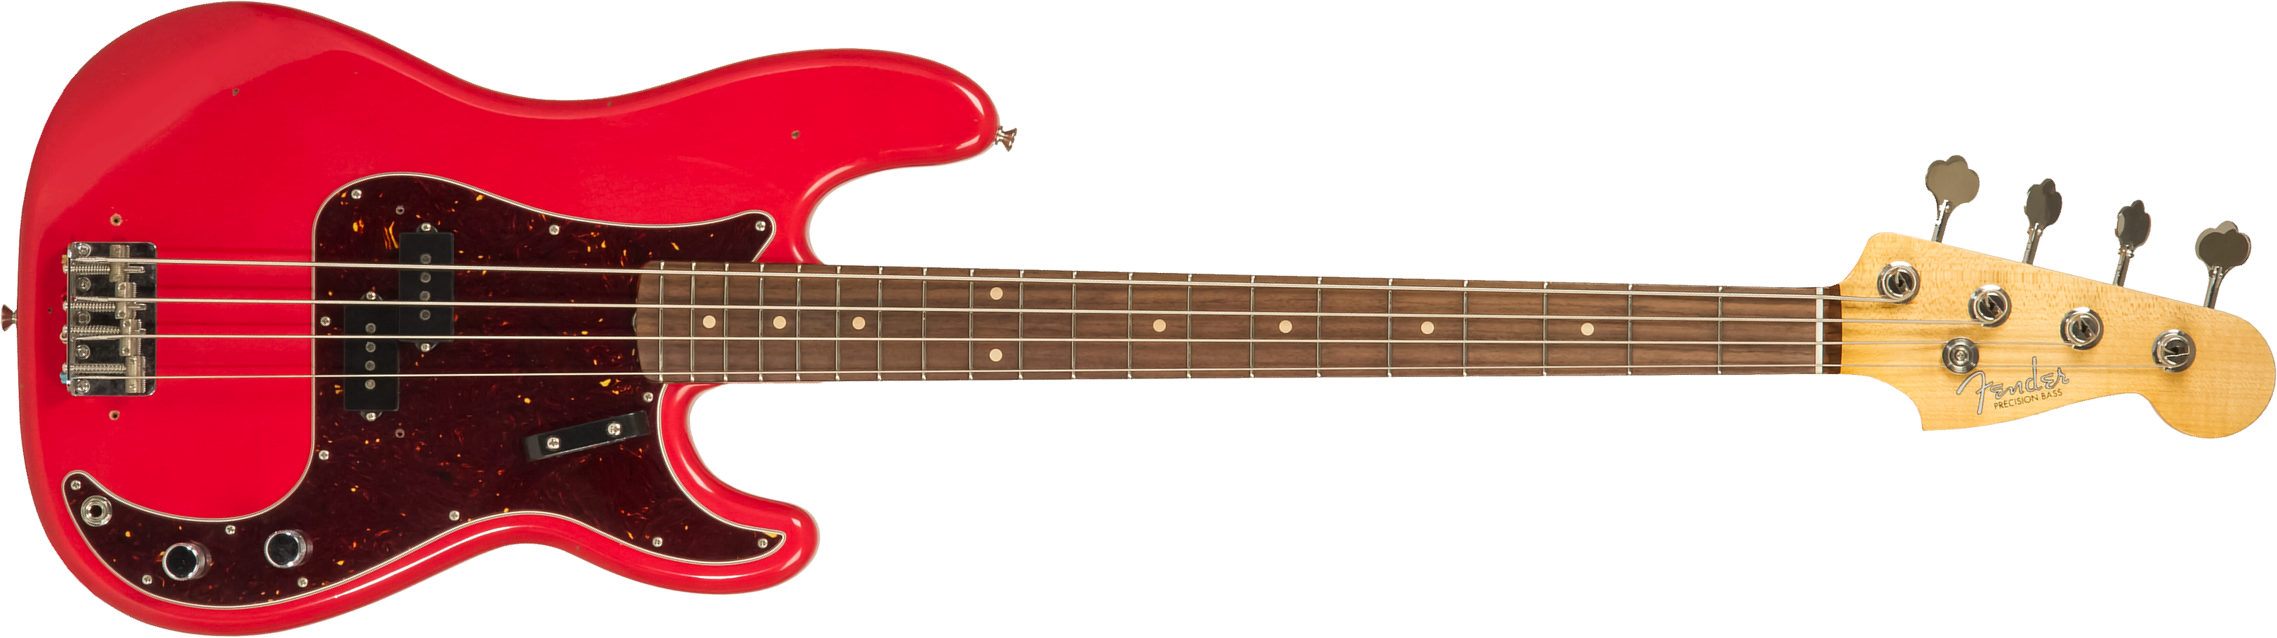 Fender Custom Shop Precision Bass 1962 Rw #r126357 - Journeyman Relic Fiesta Red - Basse Électrique Solid Body - Main picture